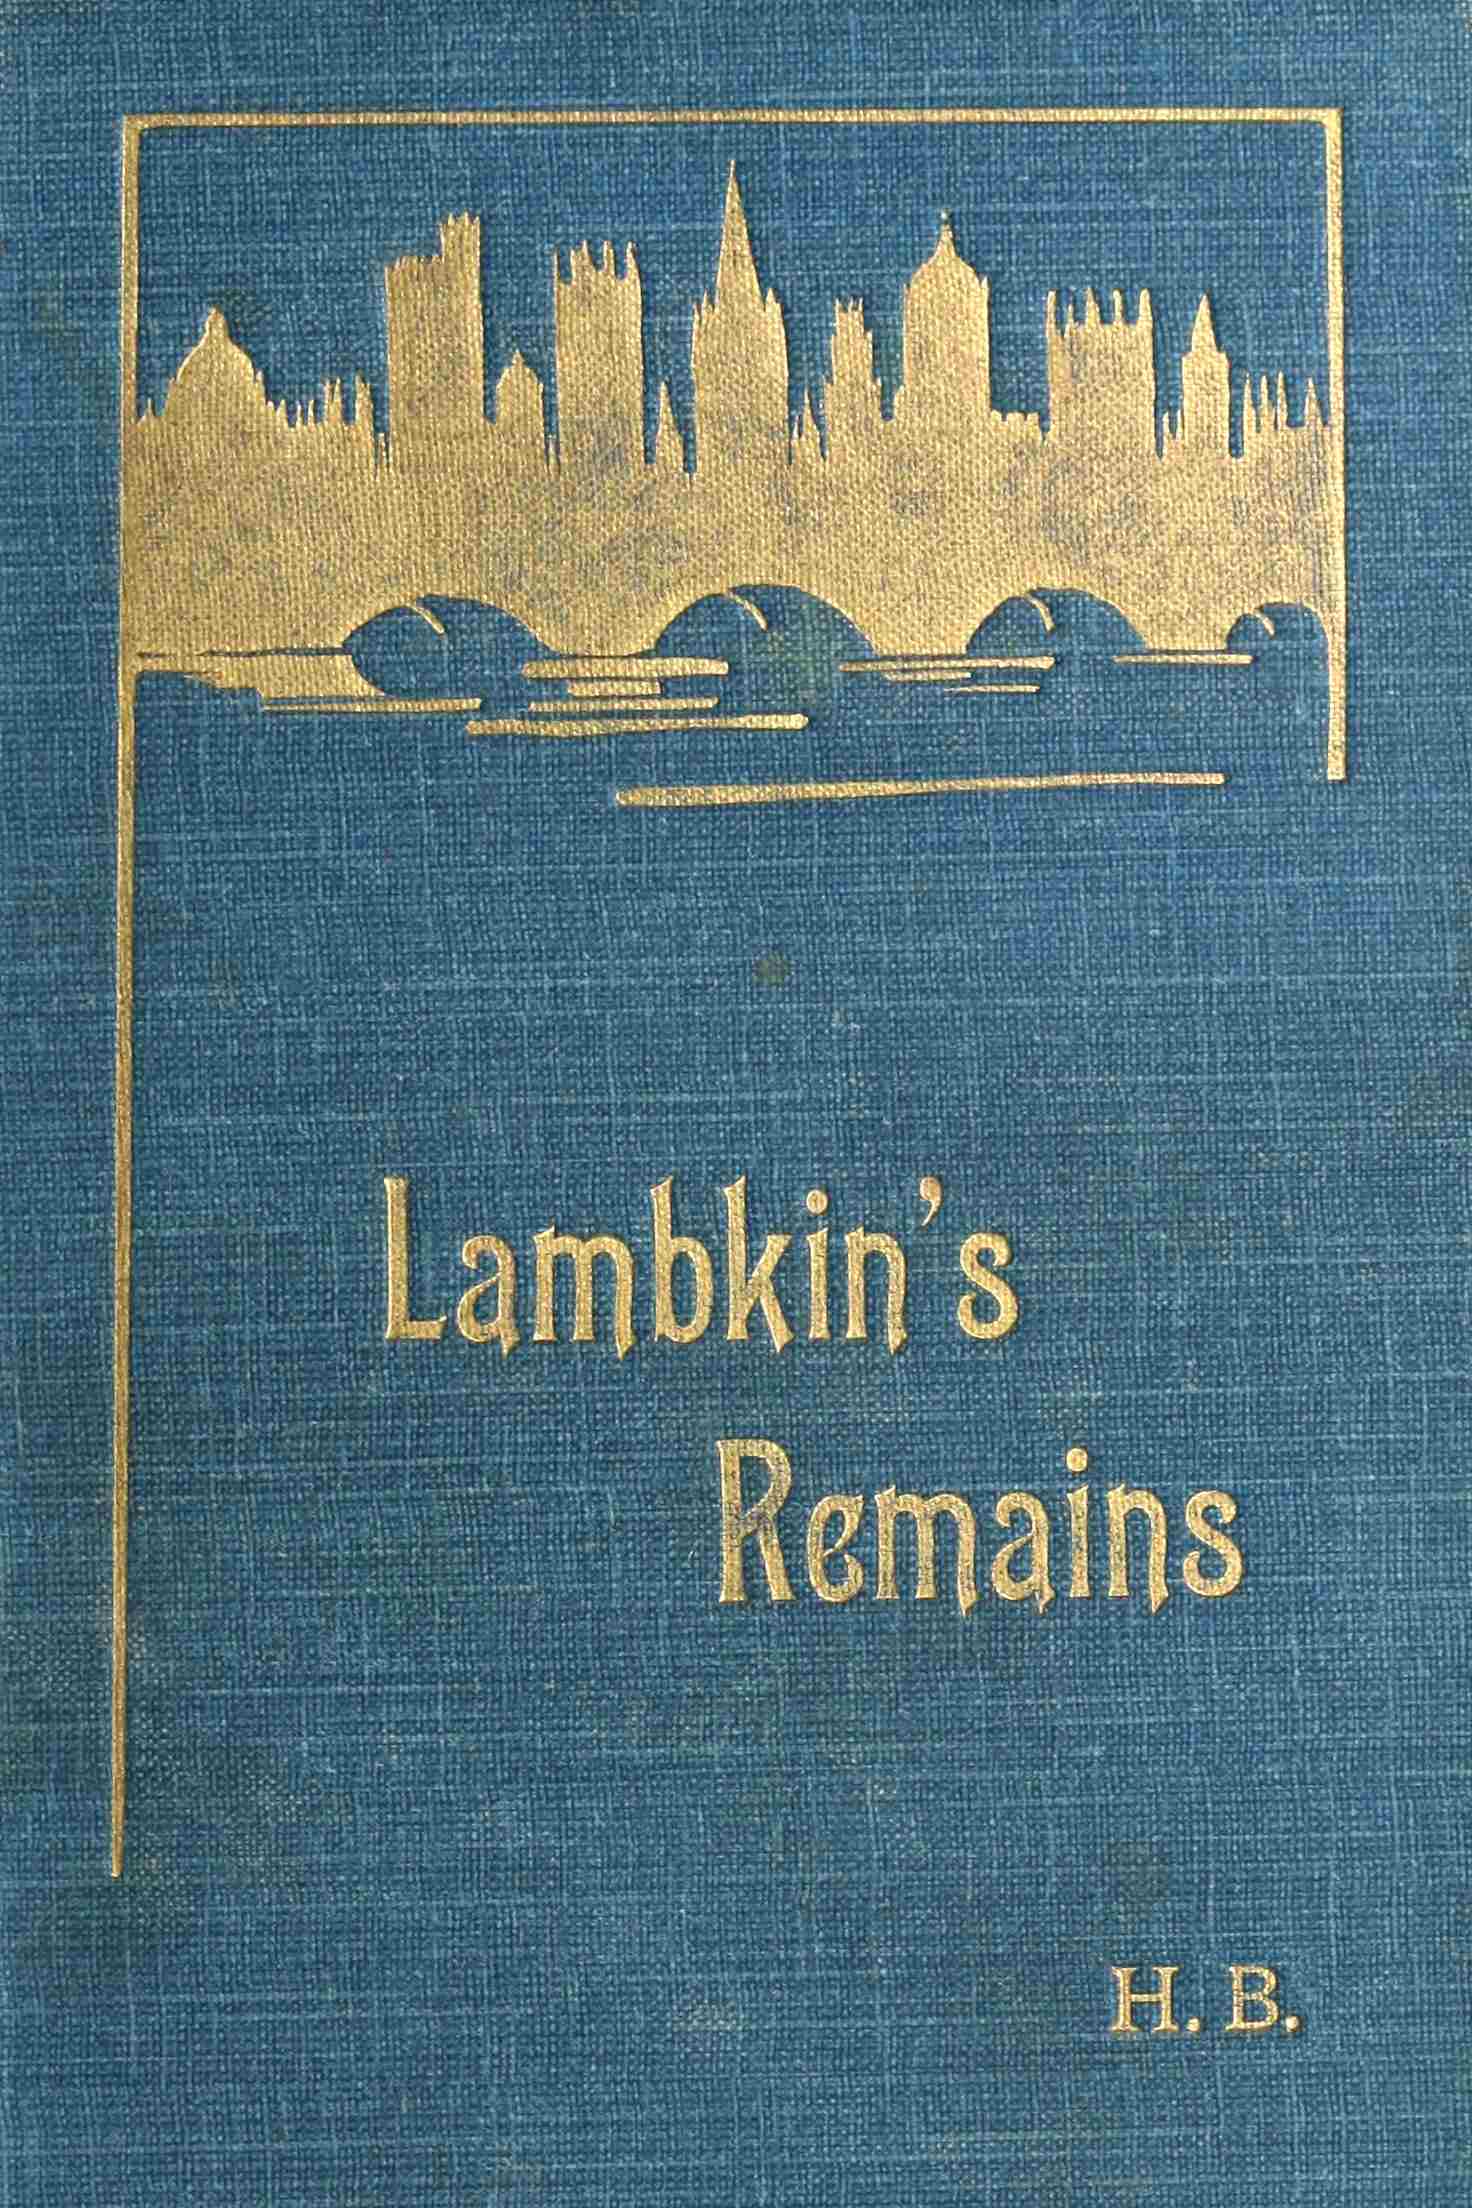 Lambkin's Remains